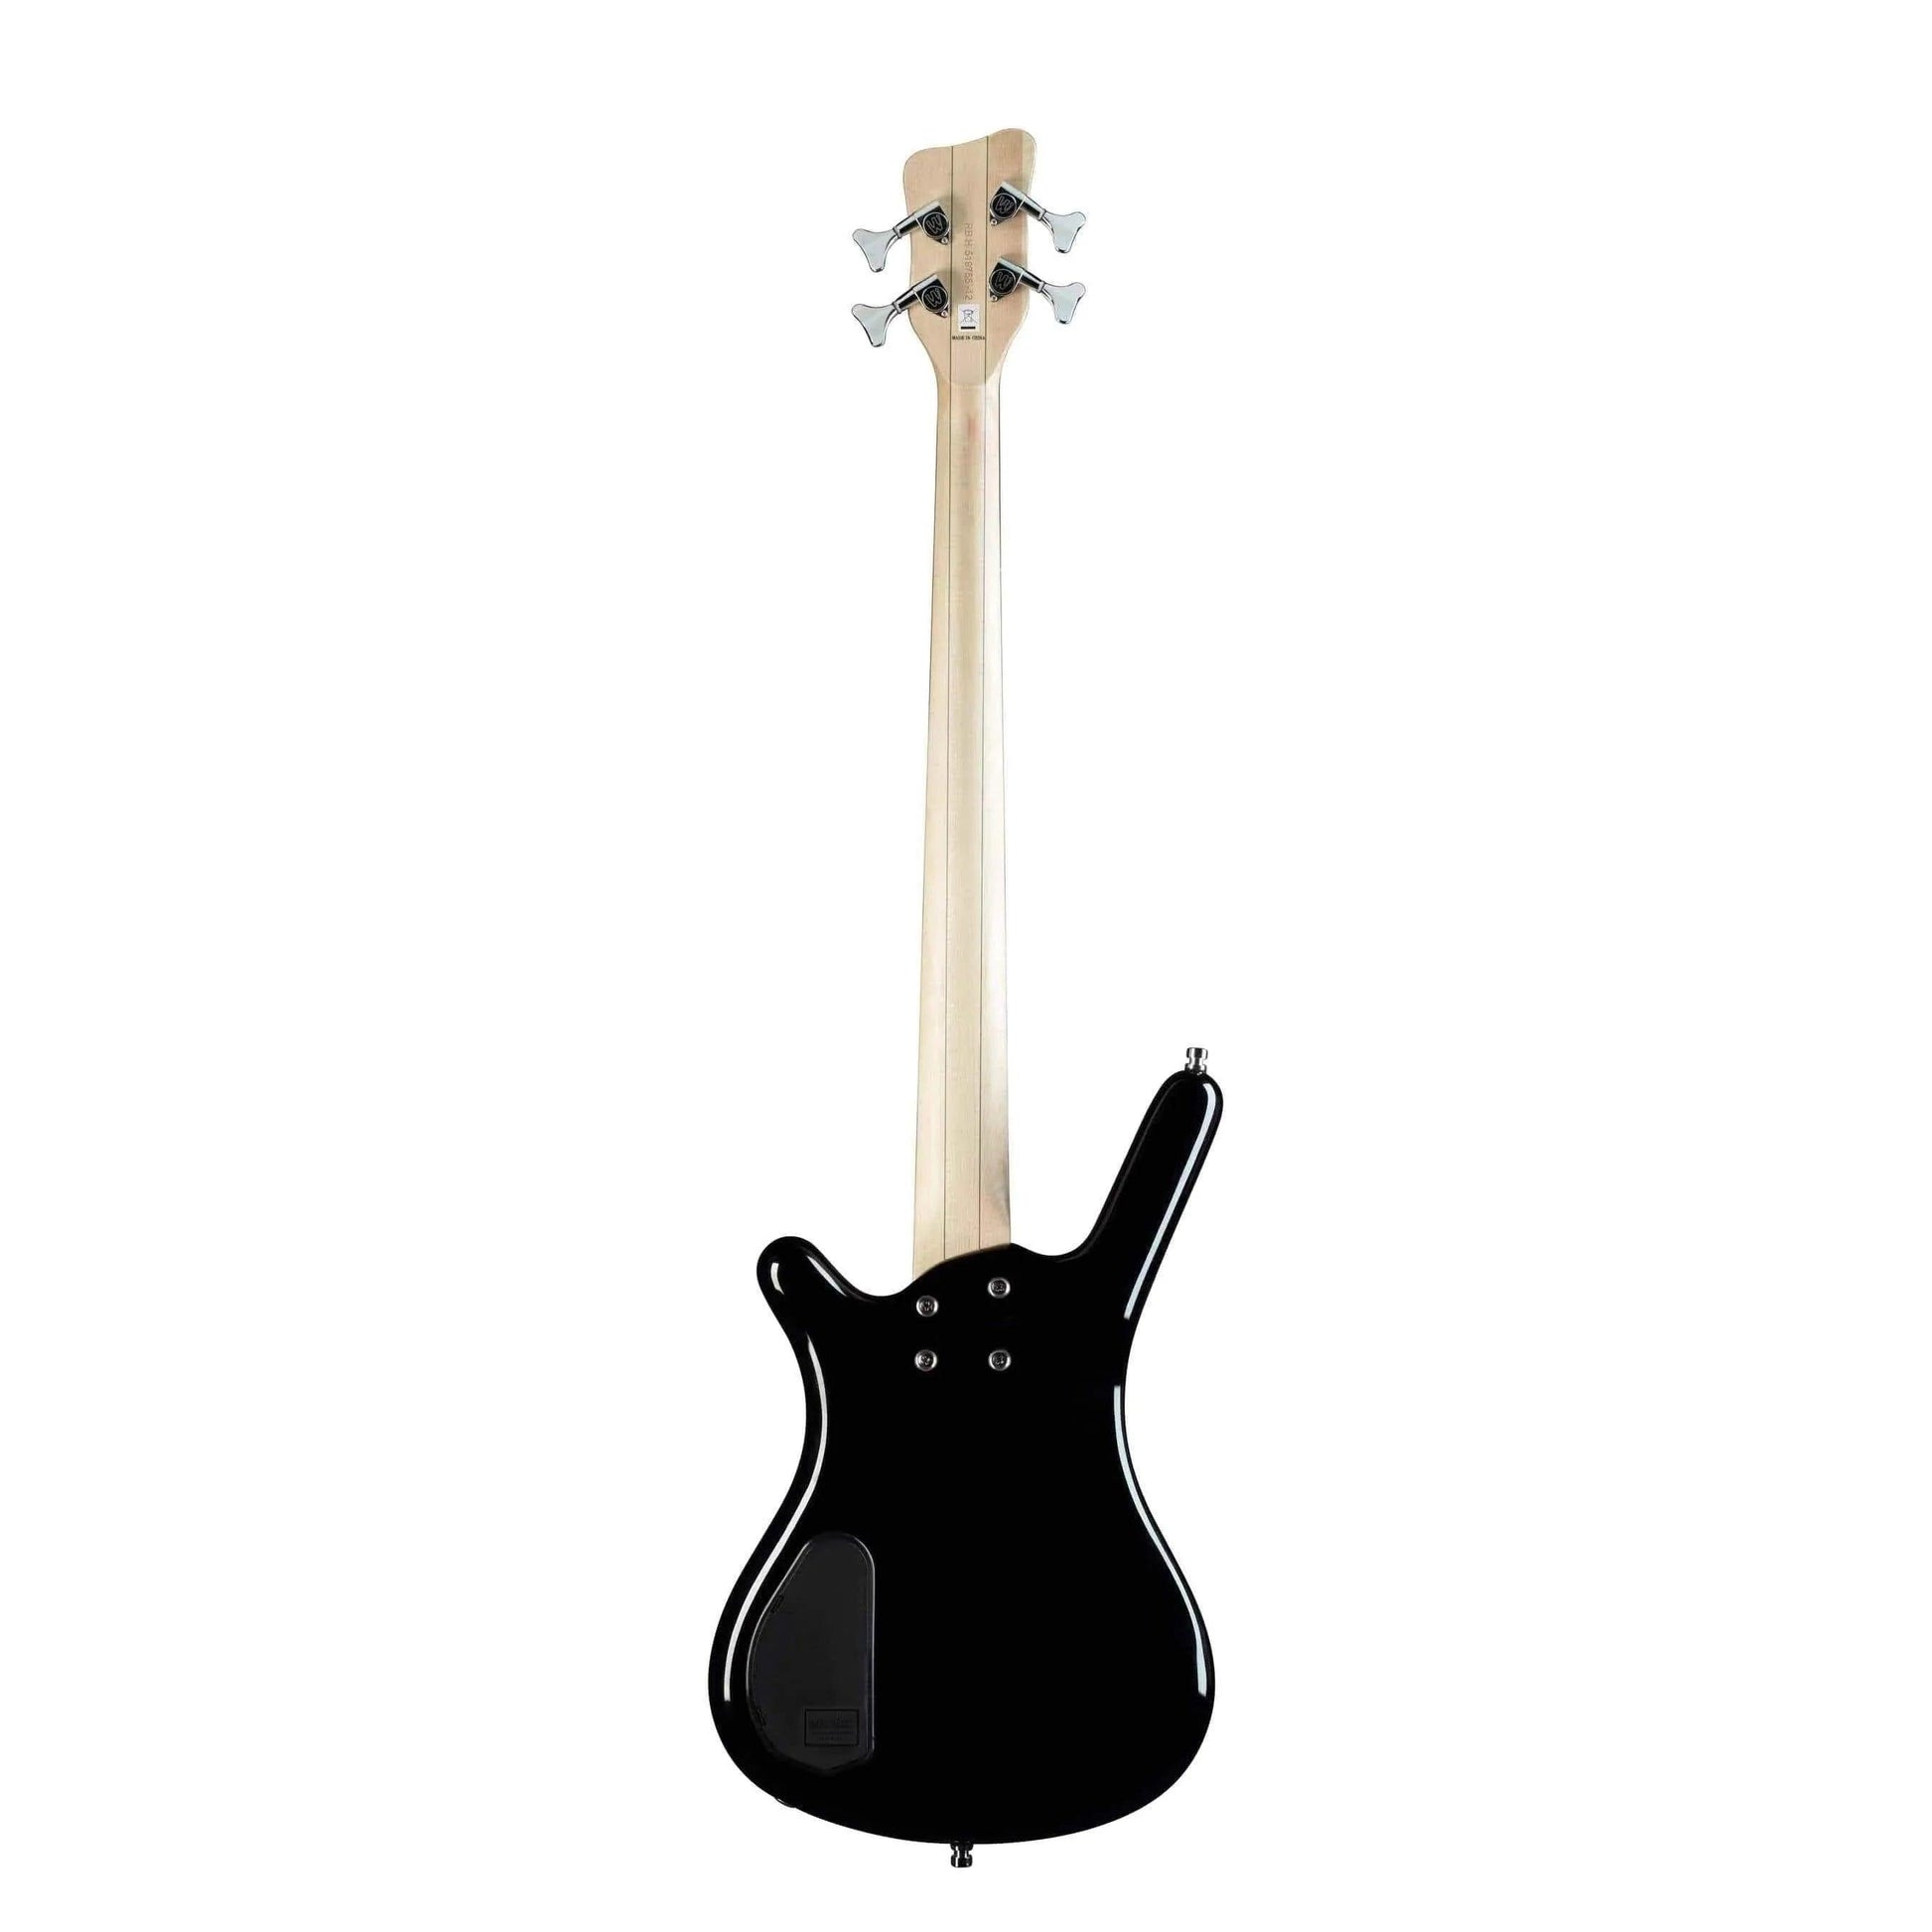 Warwick Rockbass Corvette 4-string Bass - Black High Polish (Discontinued)